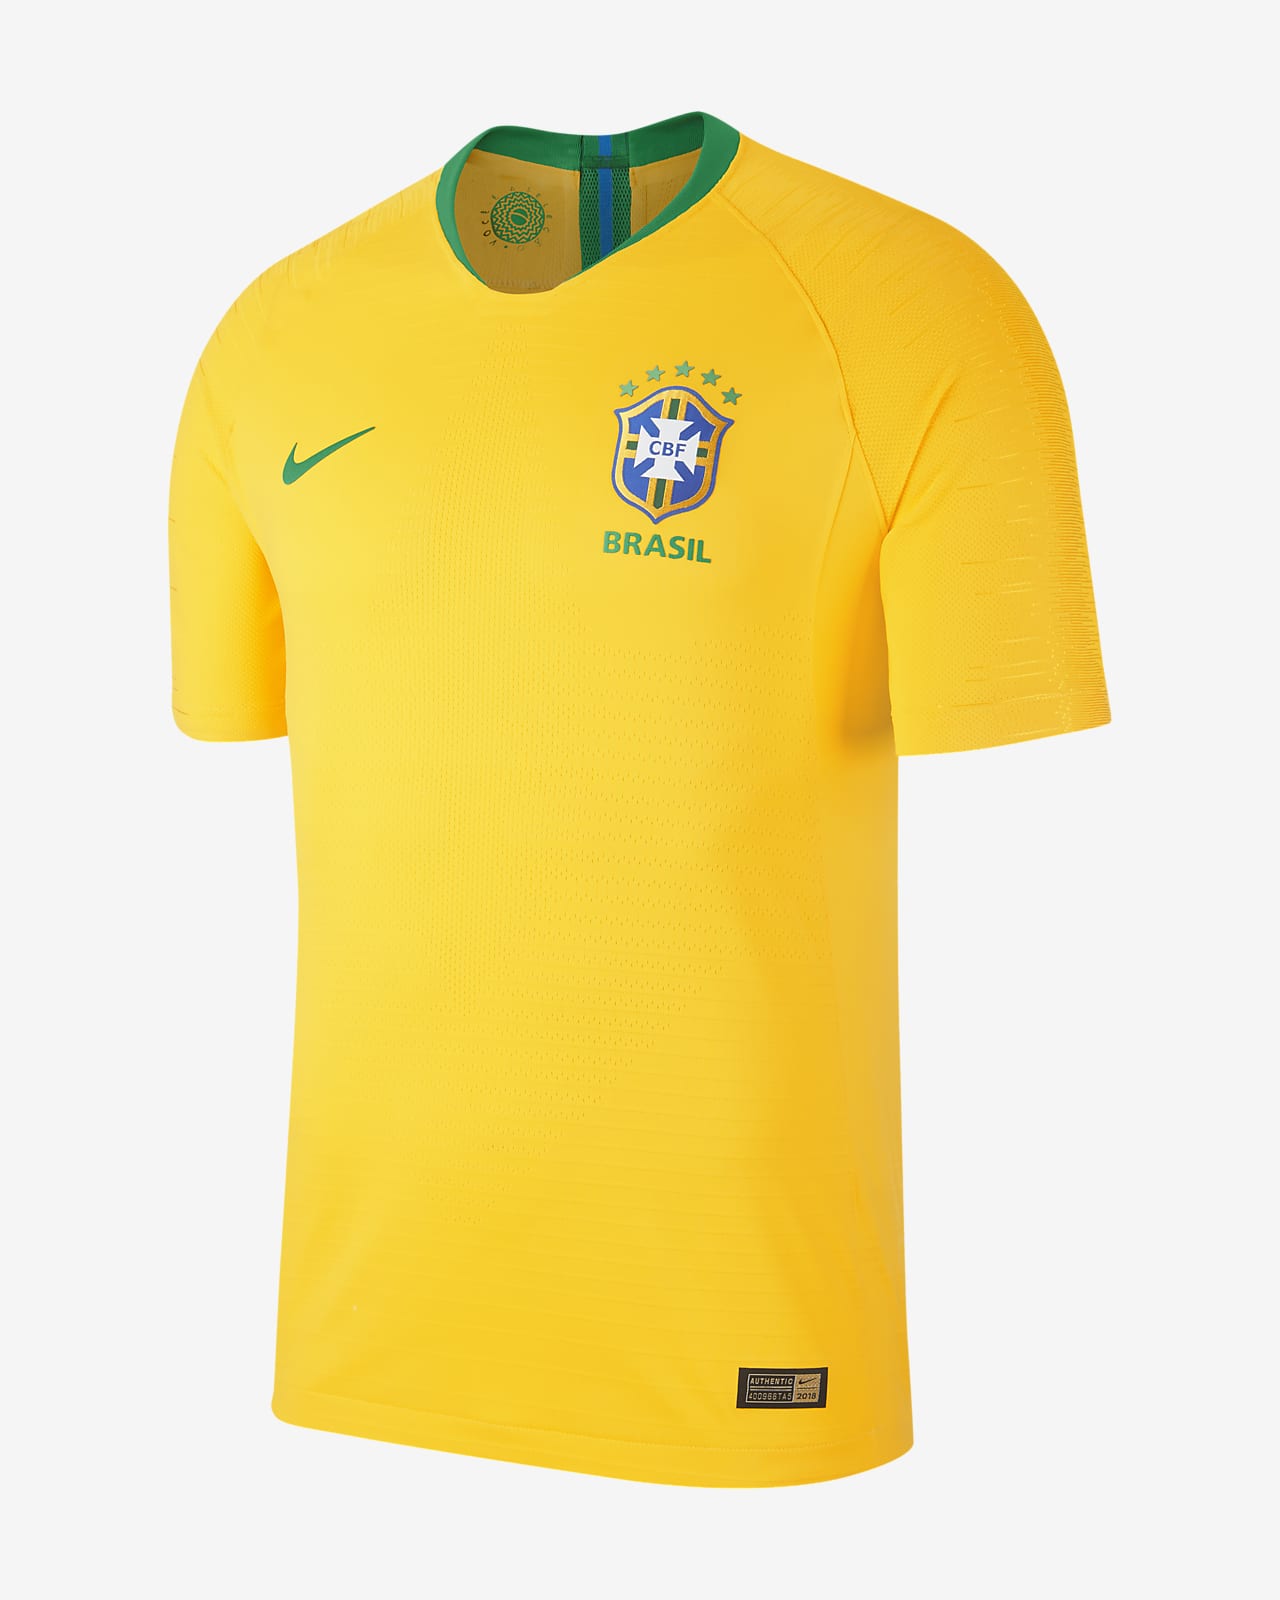 Brazil Nike Jersey -  Canada